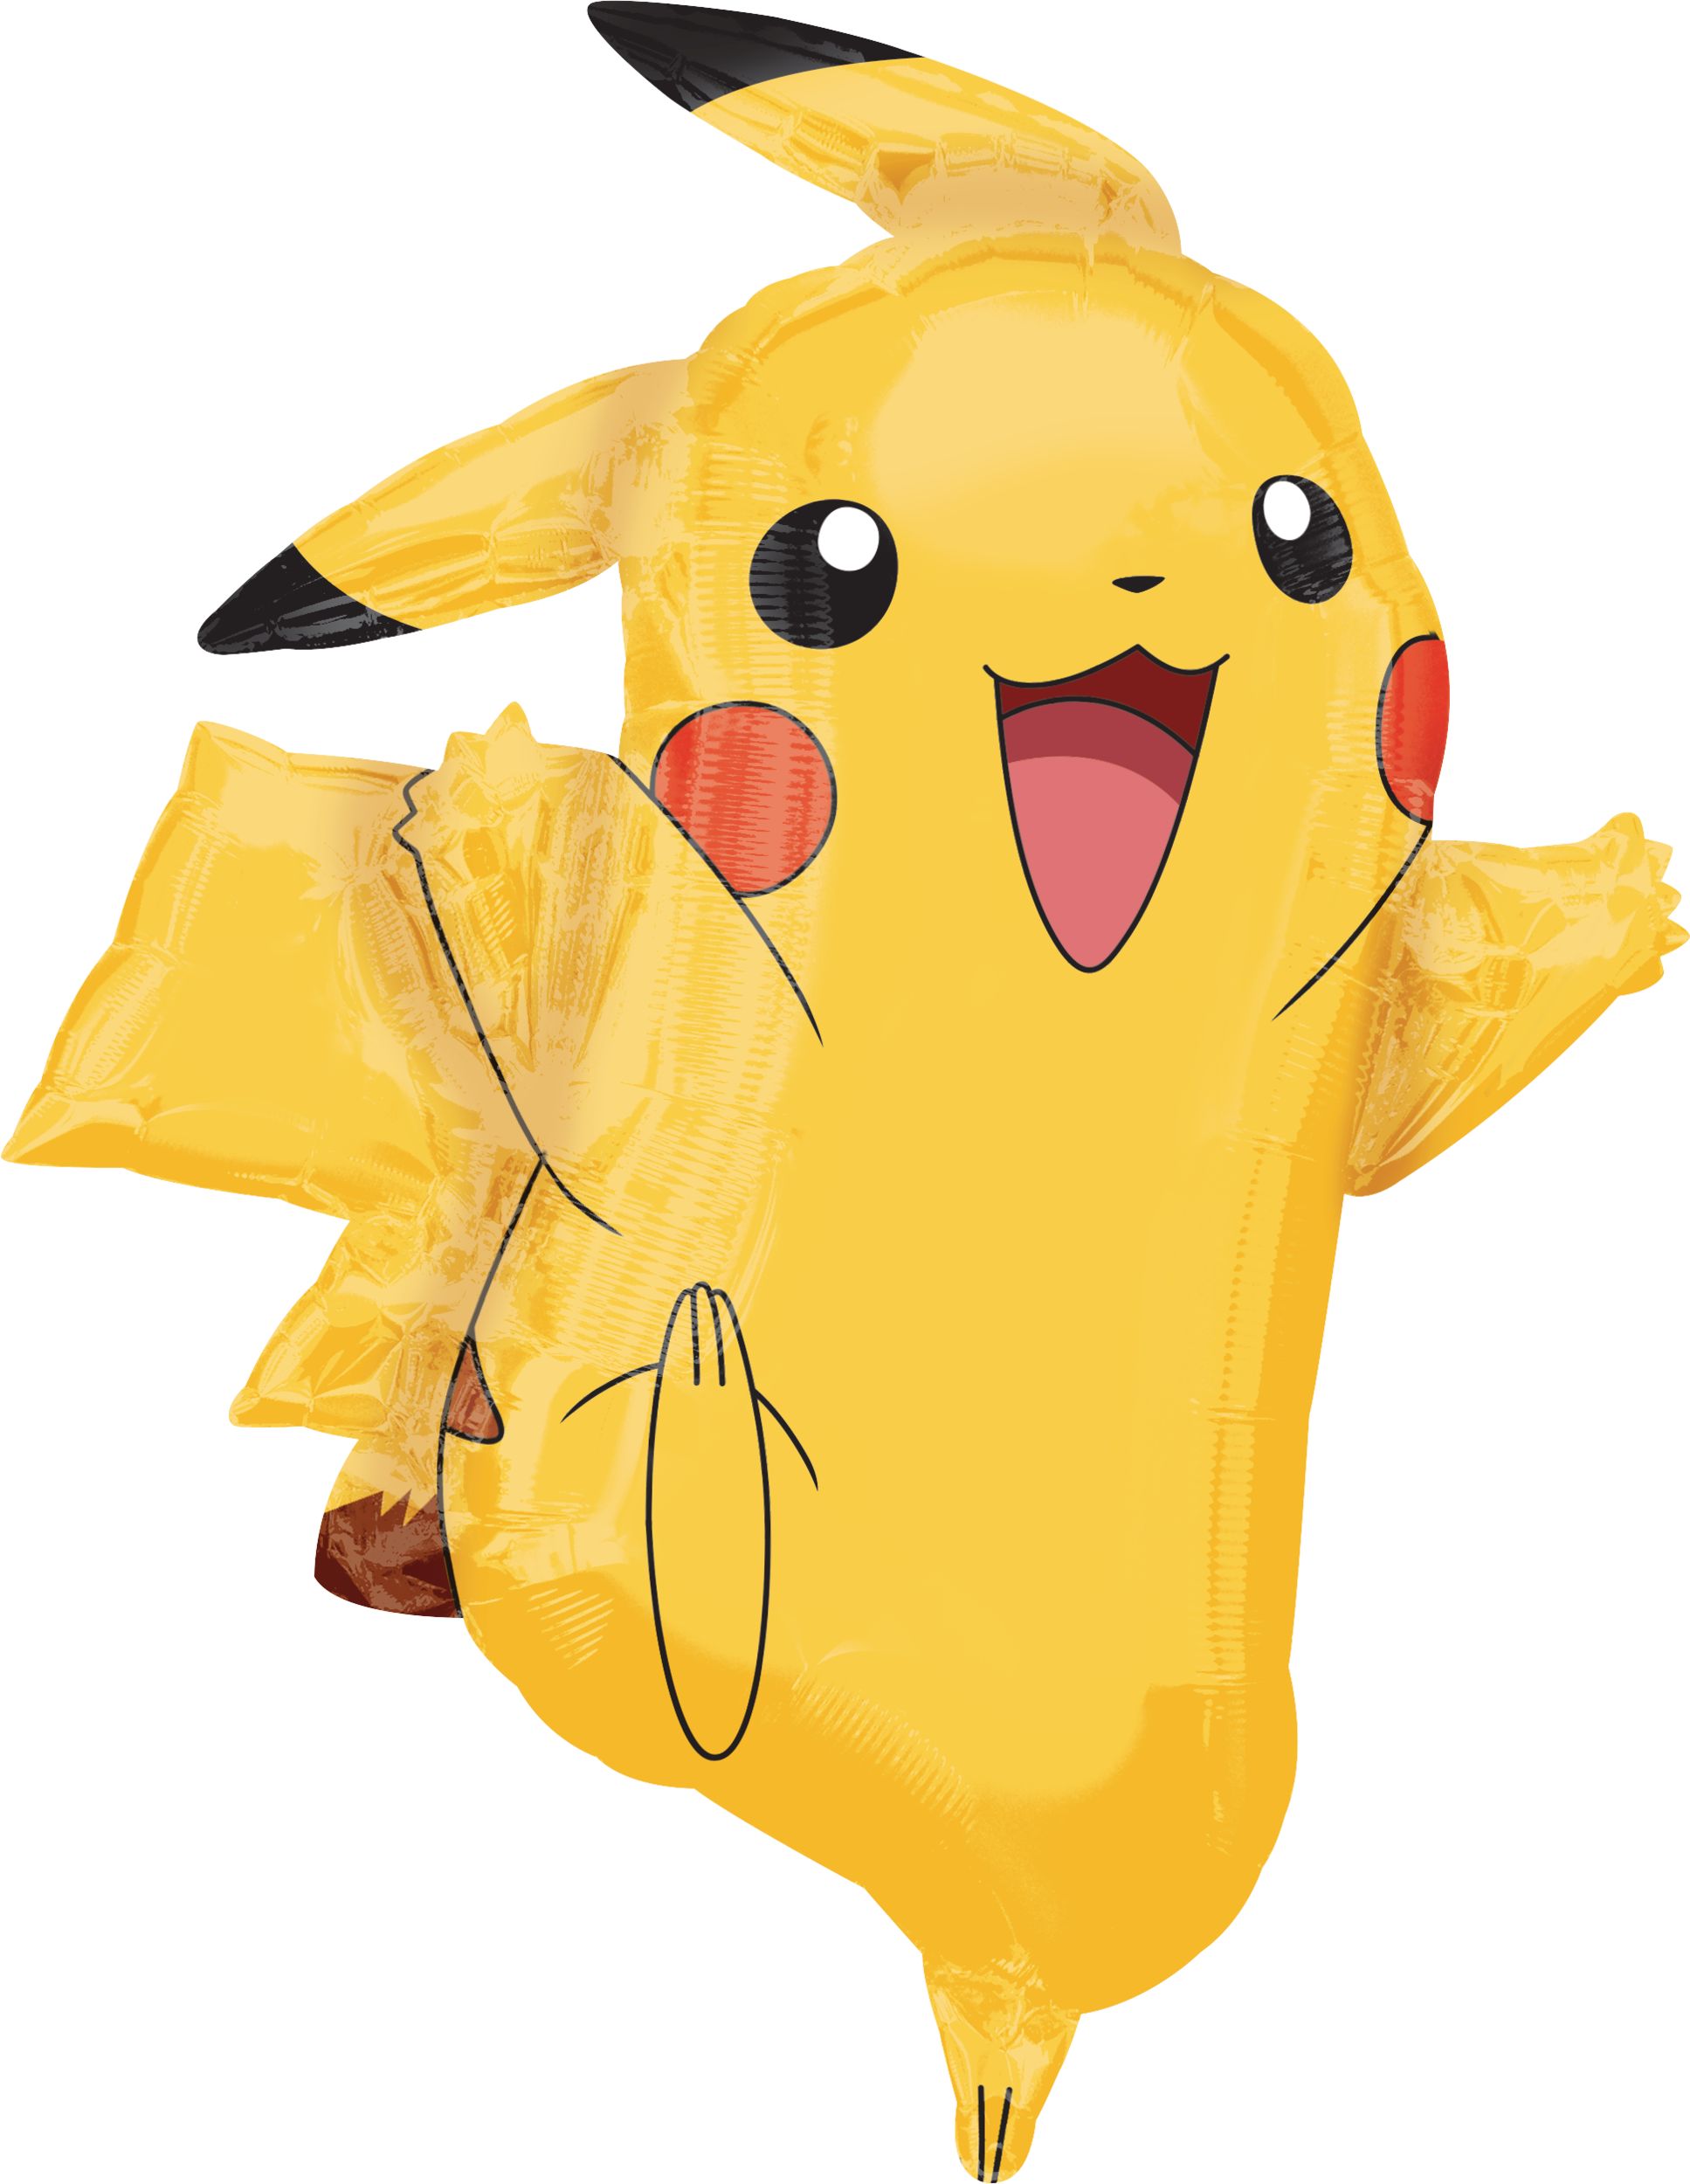 Ballon Pikachu de Pokémon, 36 po